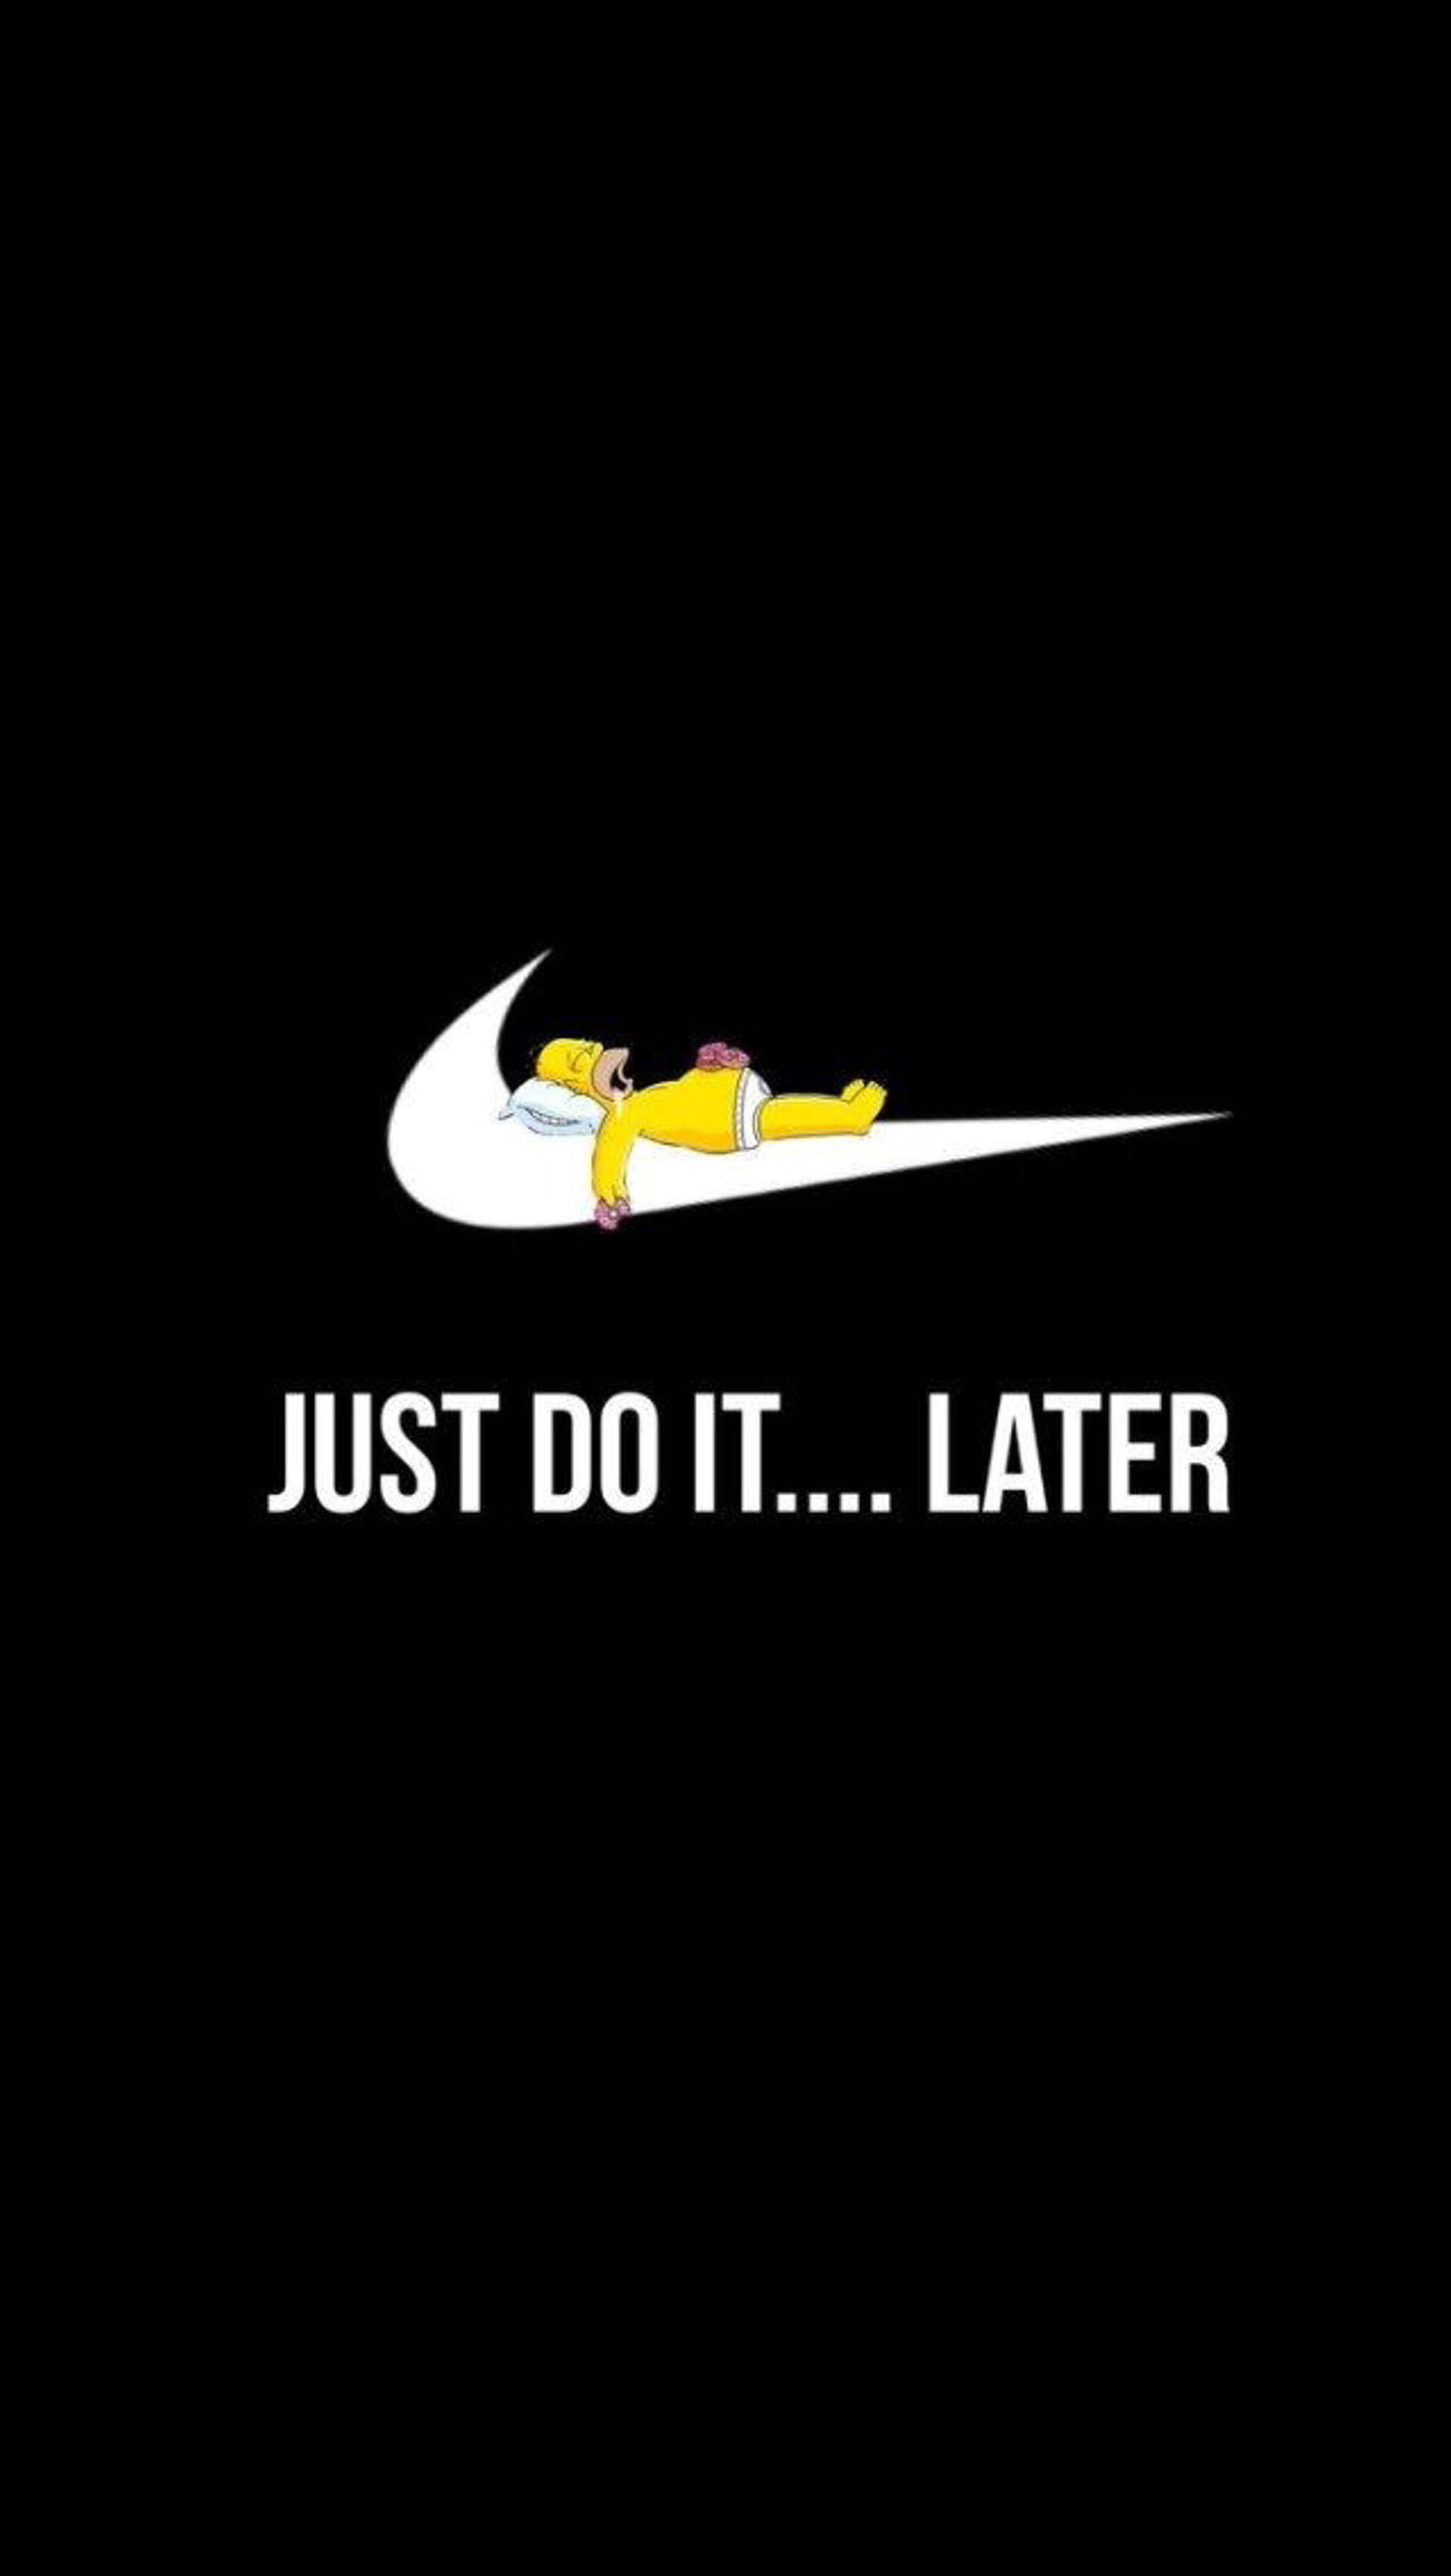 despierta bádminton Izar Download Nike Cartoon Sleeping Homer Logo Wallpaper | Wallpapers.com